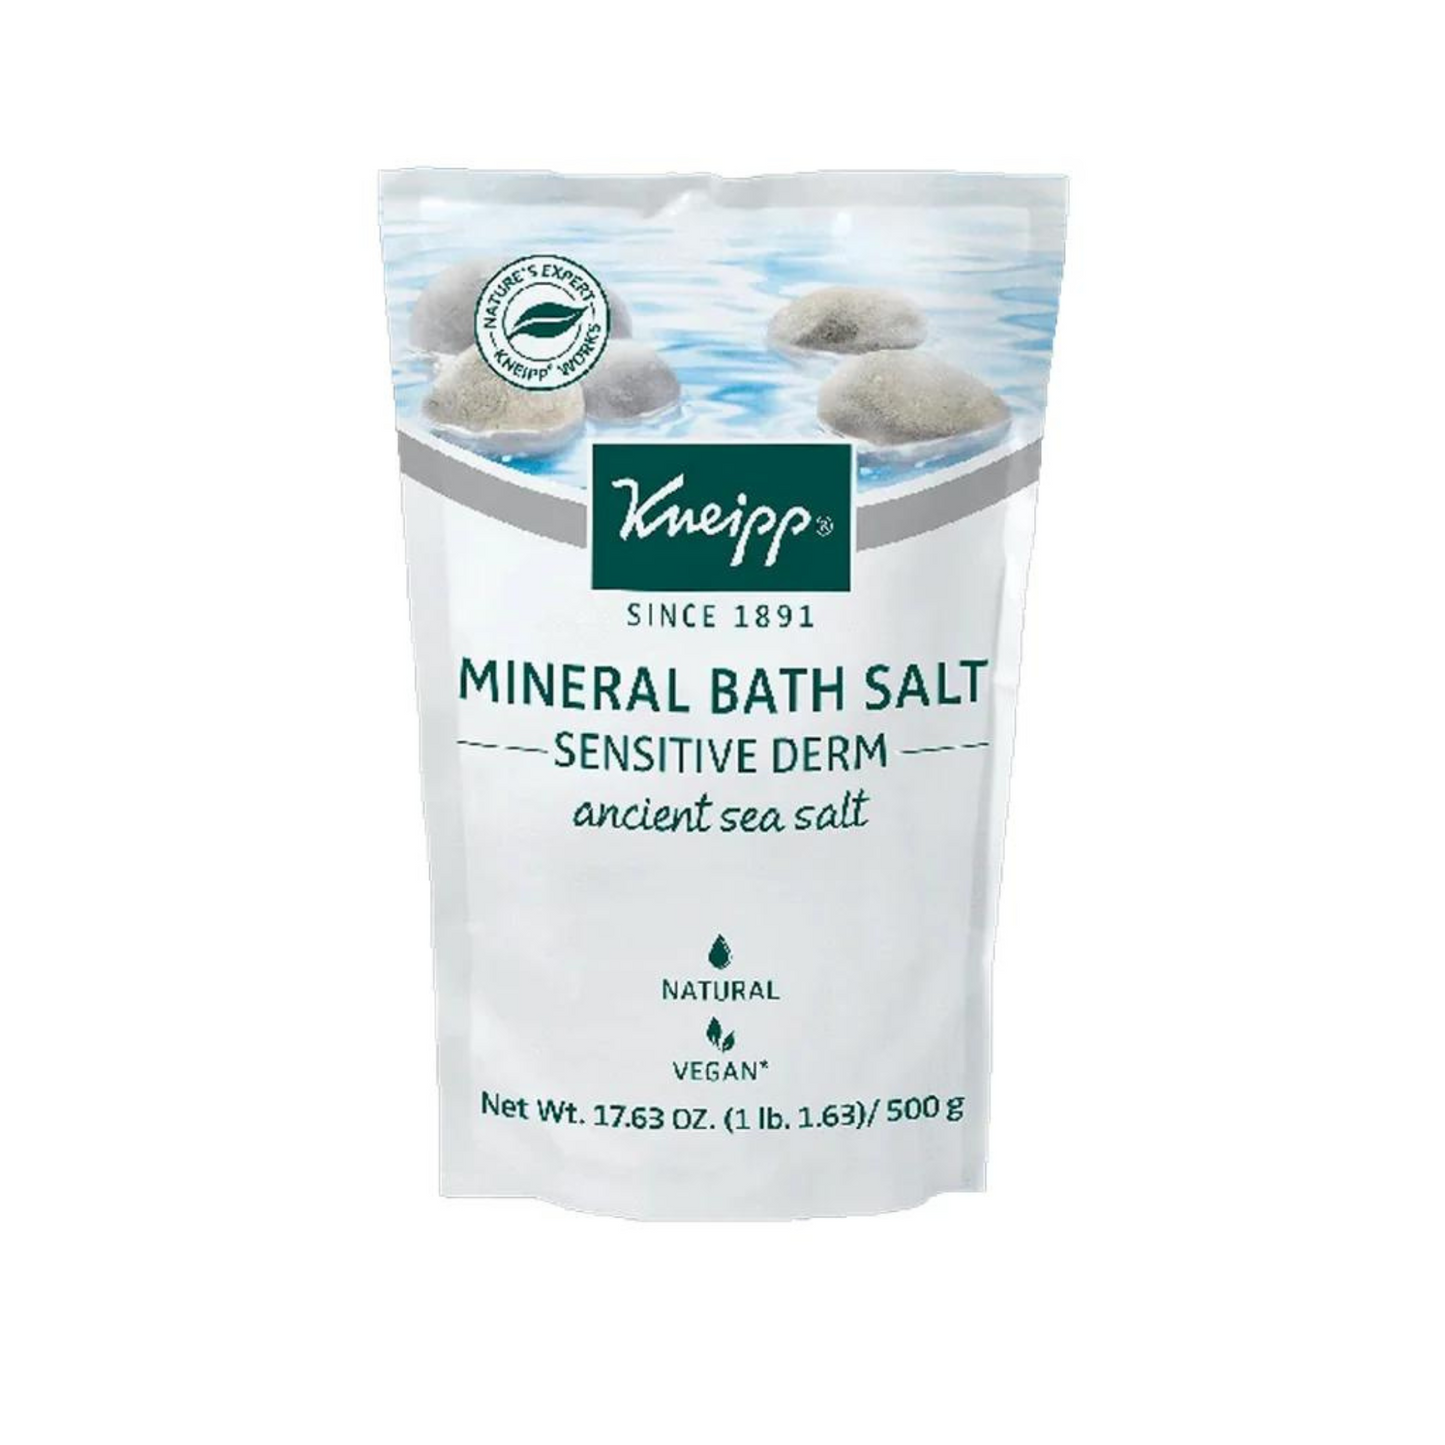 Primary Image of Ancient Sea Salt Sensitive Derm Mineral Bath Salt